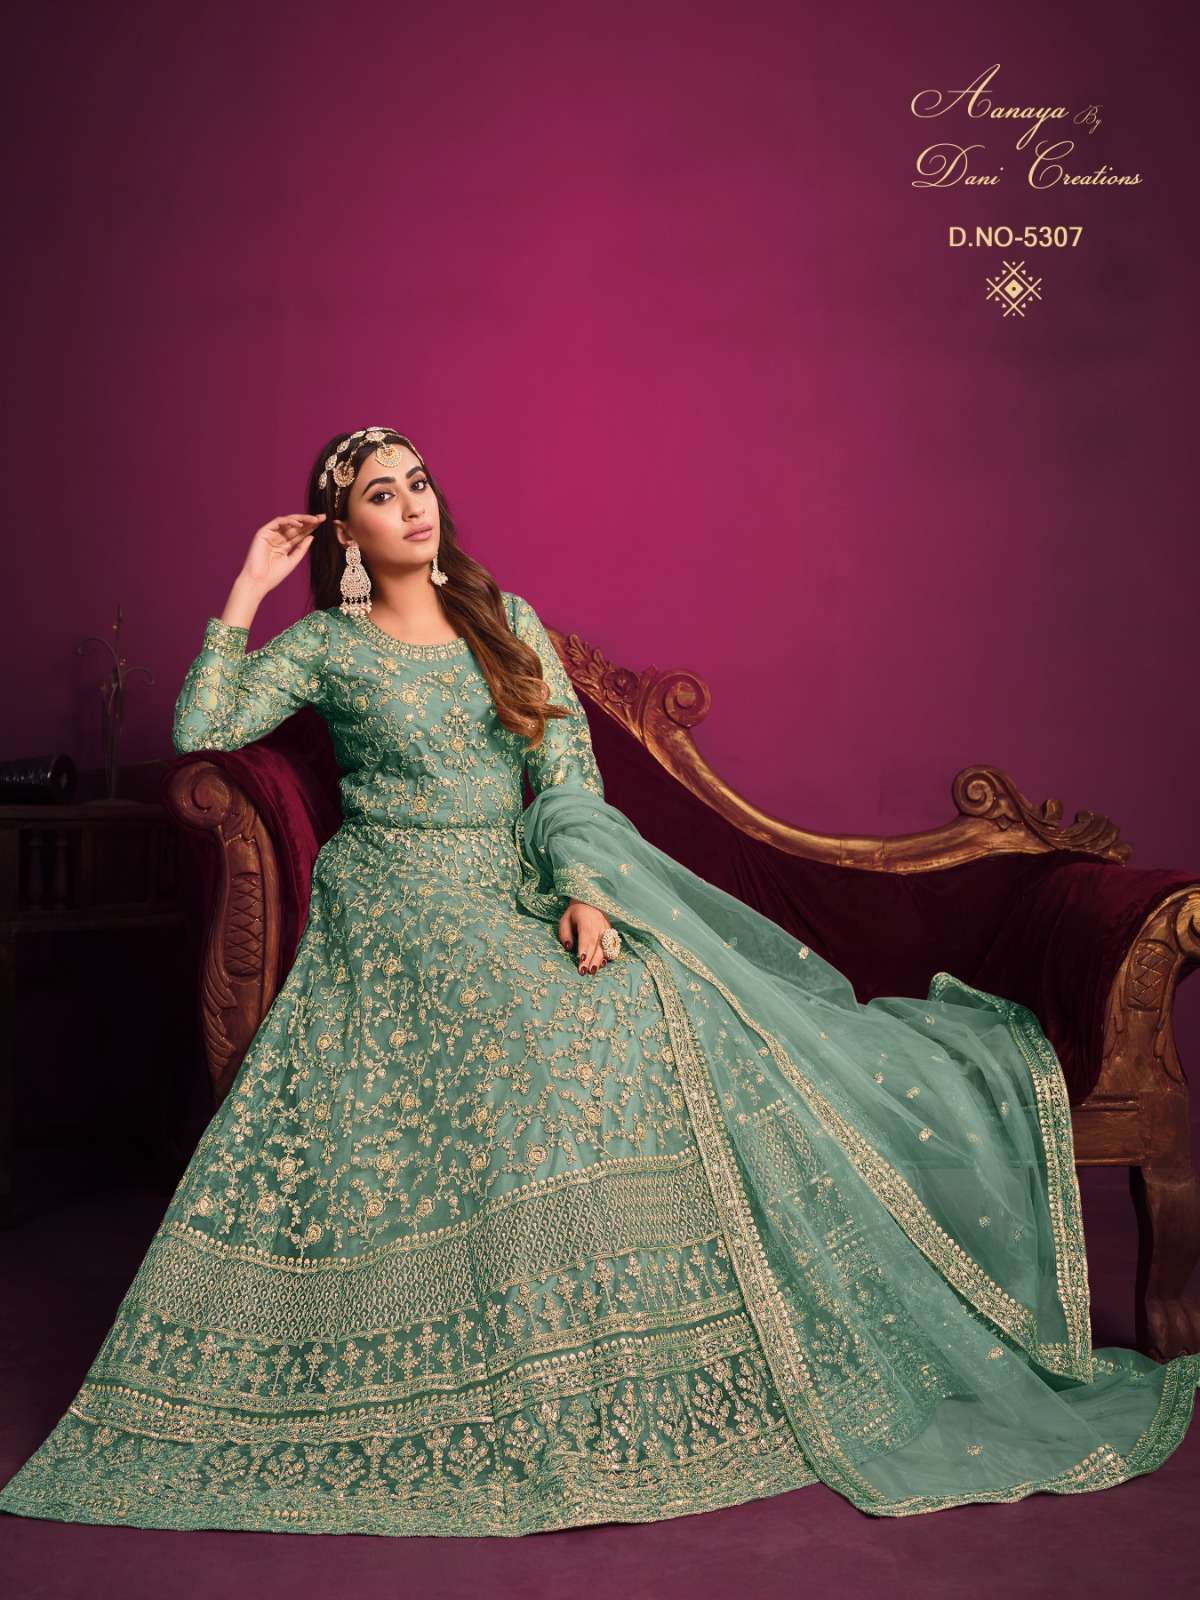 dani creation aanaya vol 153 new colours heavy designer net long salwar kameez online supplier 